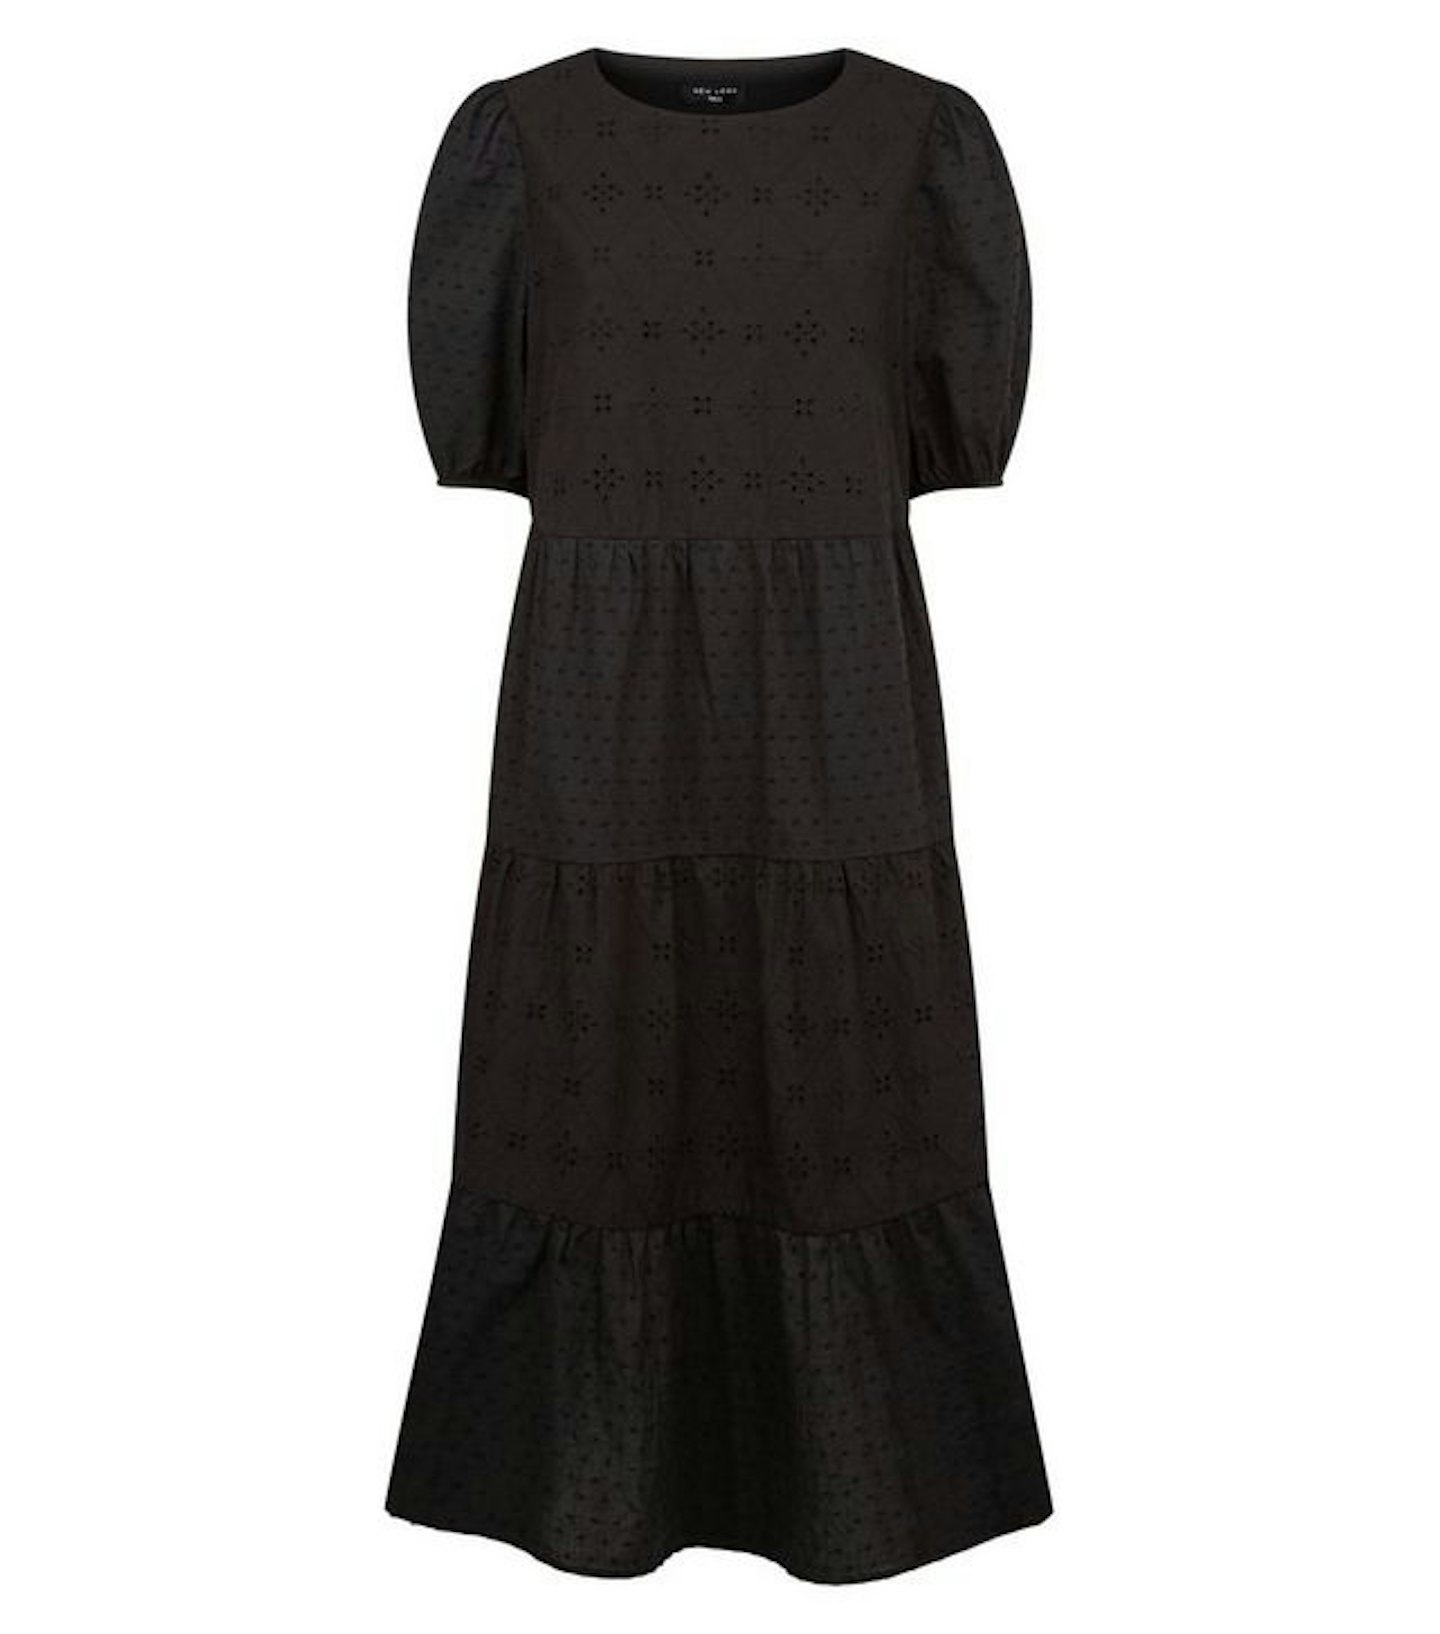 New Look, Broderie Puff Sleeve Midi Dress, £27.99